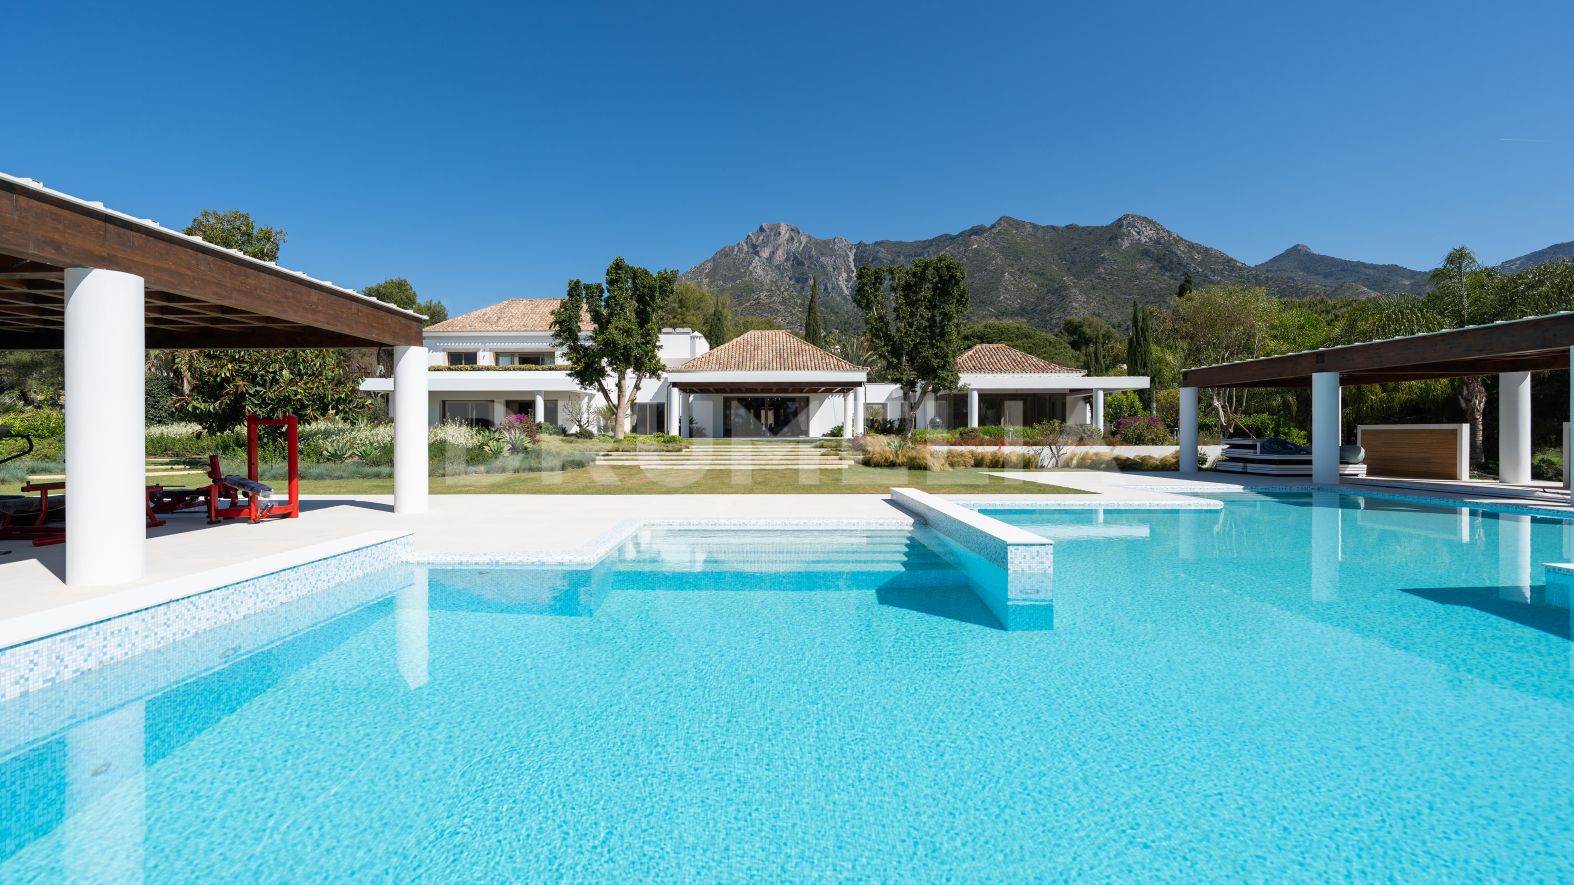 Outstanding Modern Mediterranean Luxury Grand House, Sierra Blanca, Marbella Golden Mile